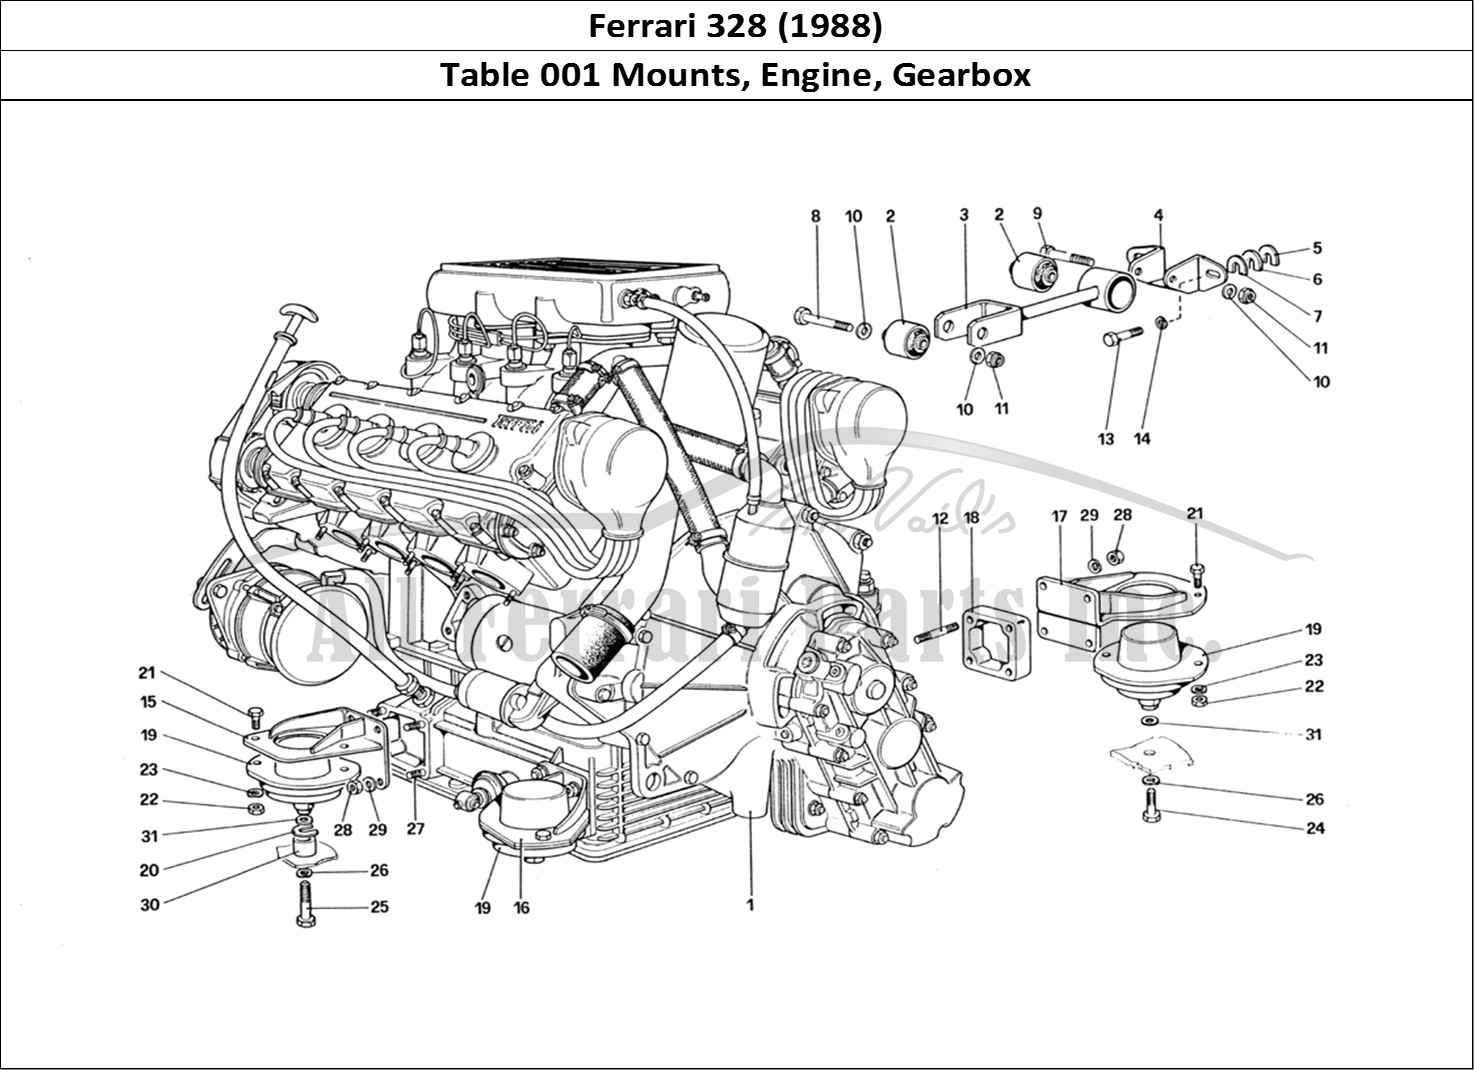 Ferrari Parts Ferrari 328 (1988) Page 001 Engine - Gearbox and Supp